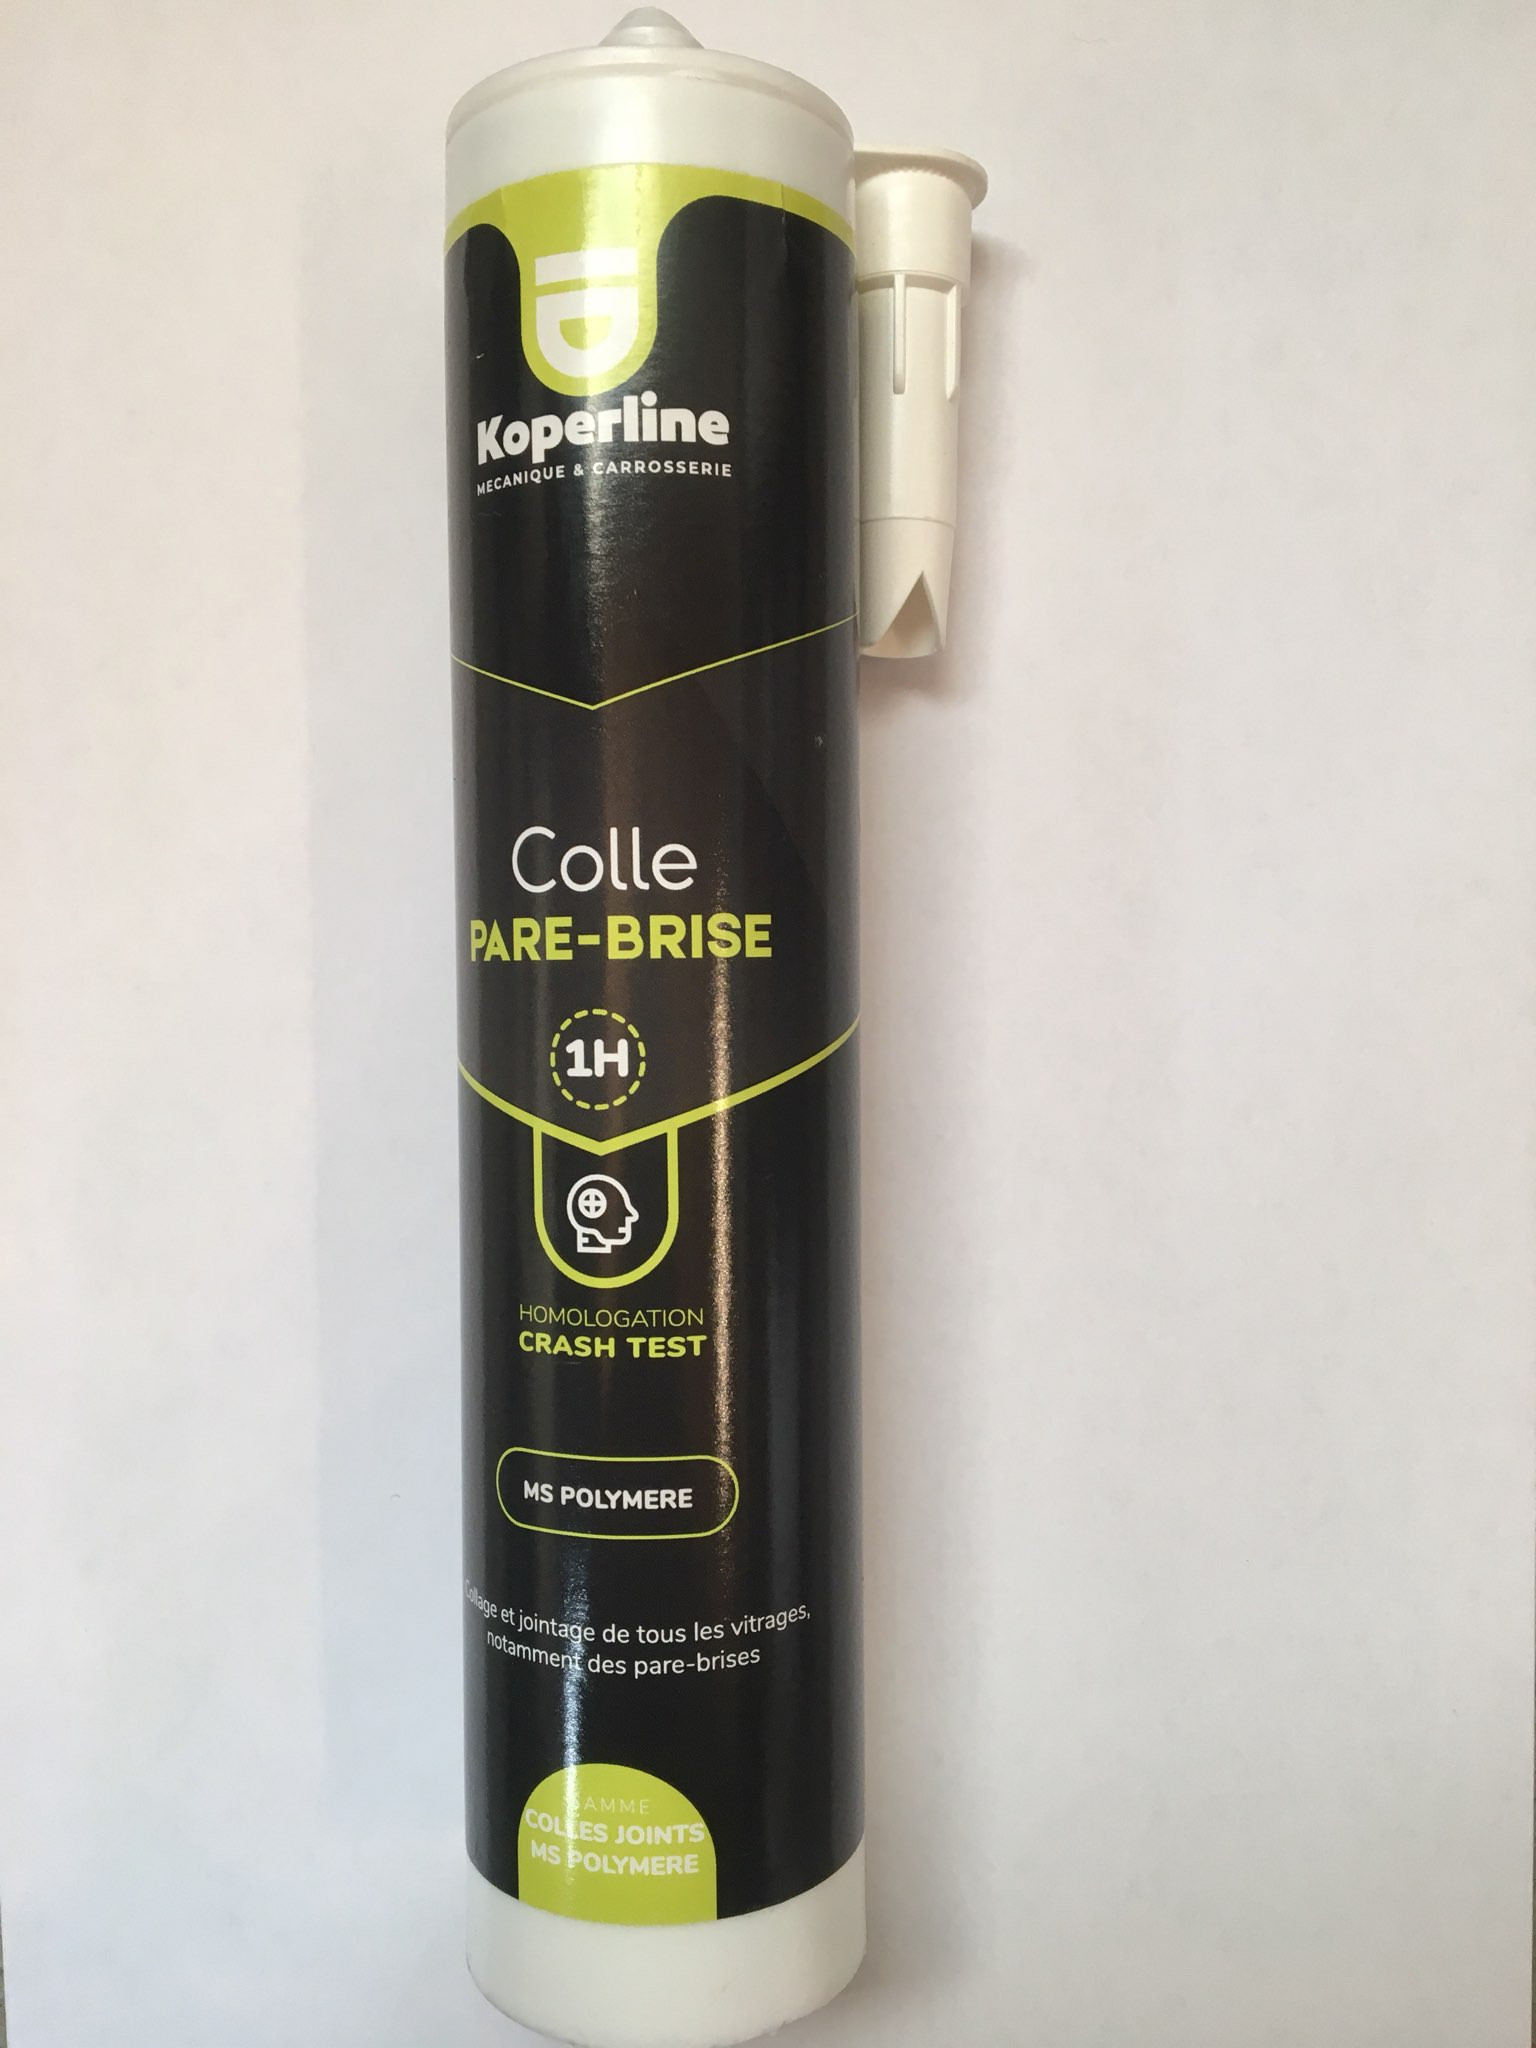 Colle Pare-Brise PU & Colle Joint pour carrosserie